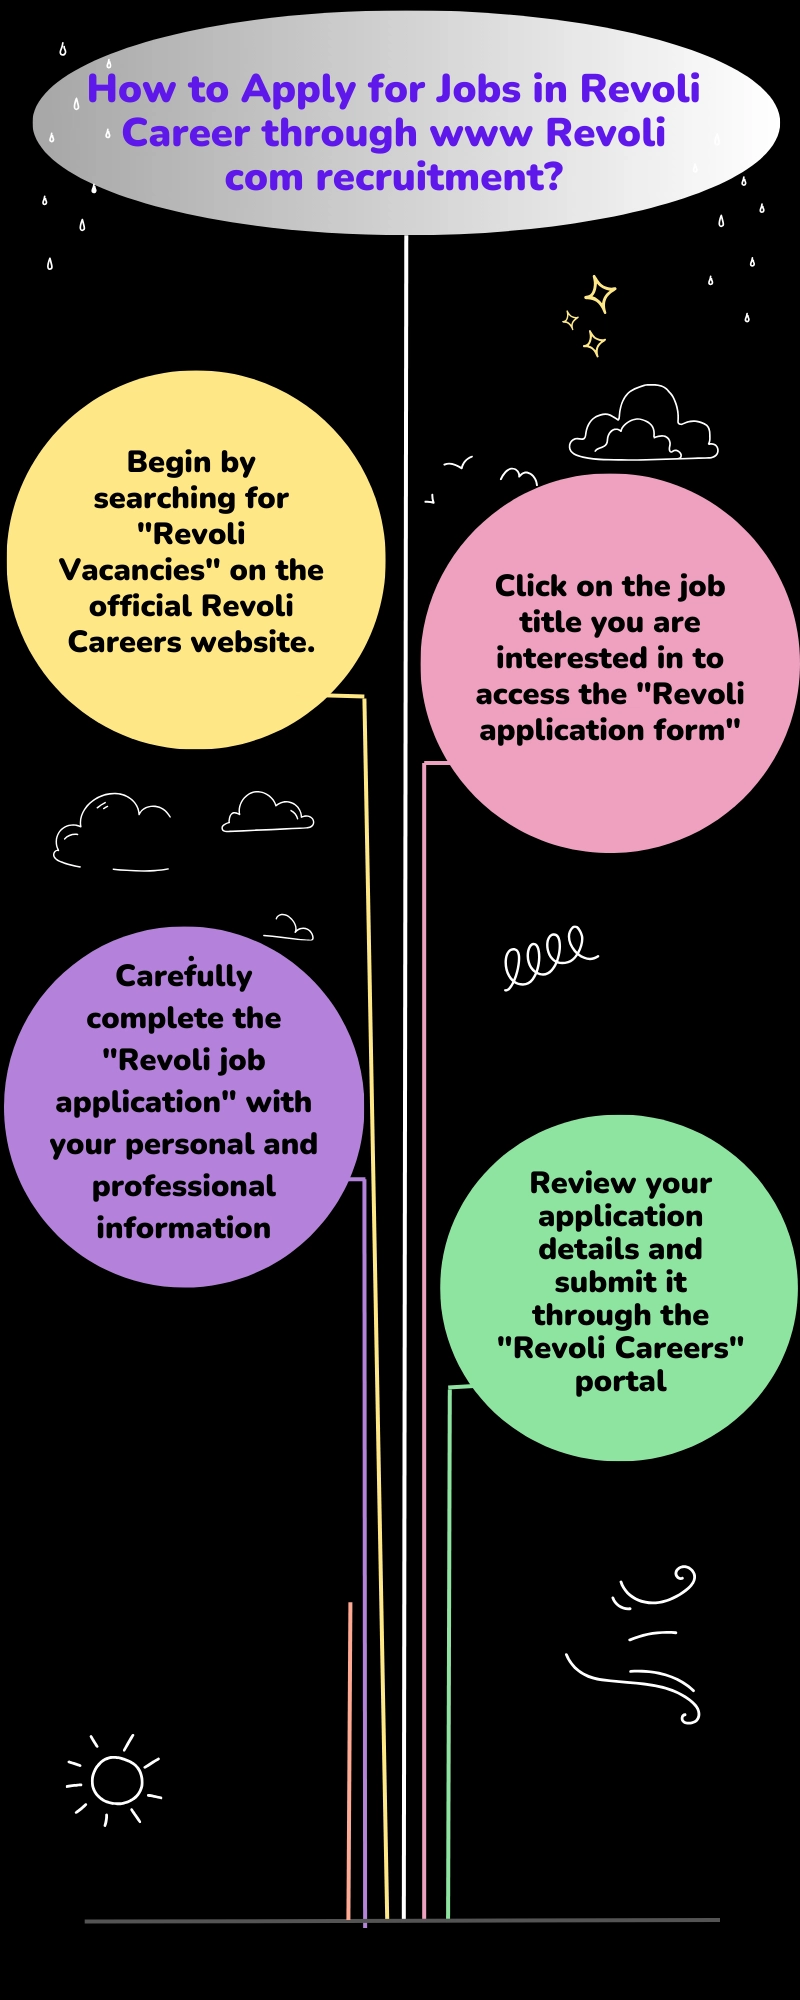 How to Apply for Jobs in Revoli Career through www Revoli com recruitment?